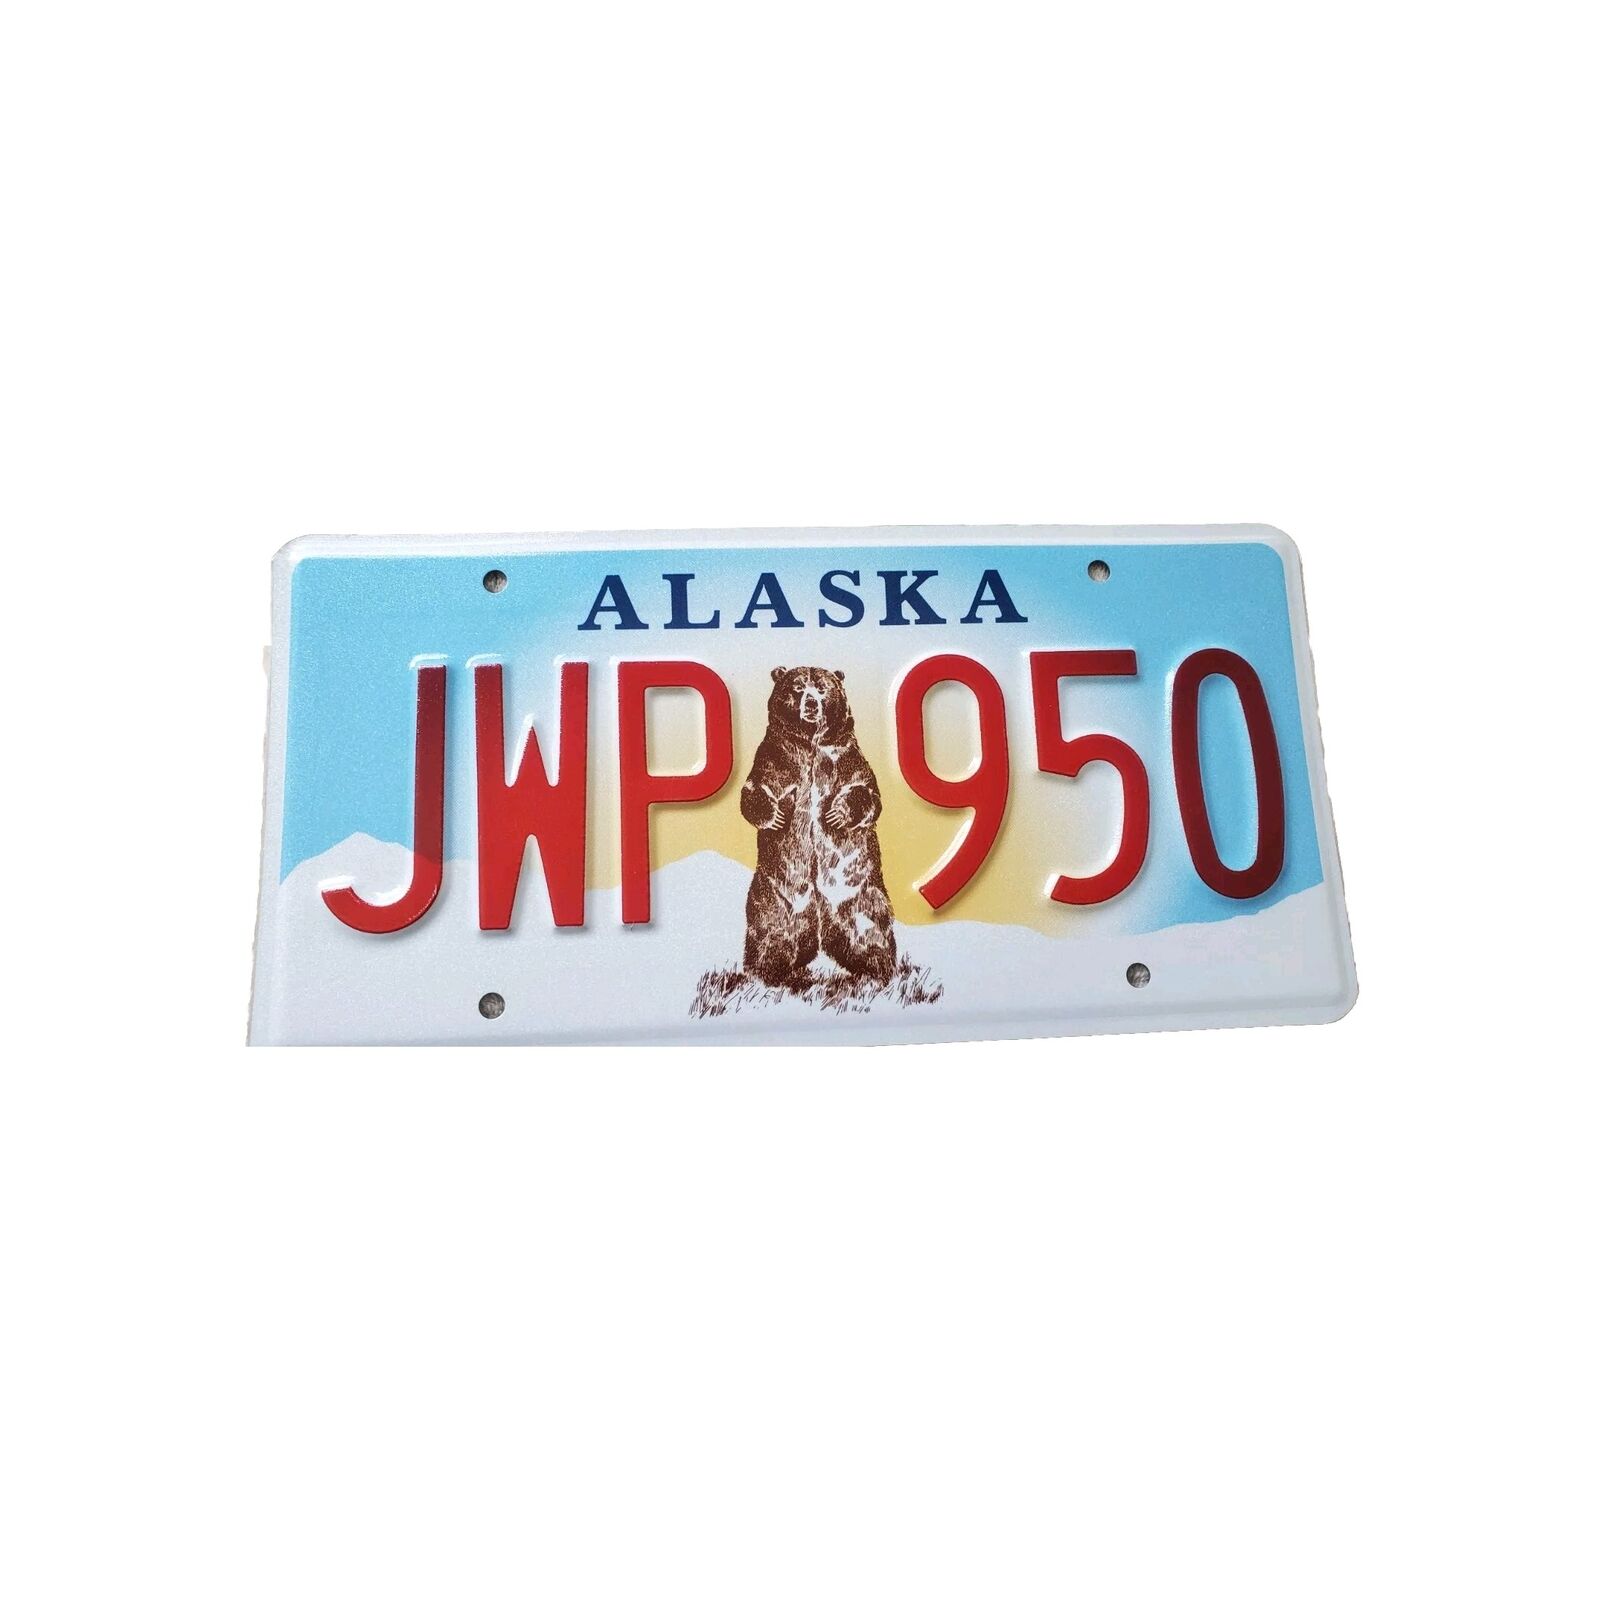 Alaska Standing Bear License Plate #JWP950  Expired 3 Years    BUY NOW $9.99